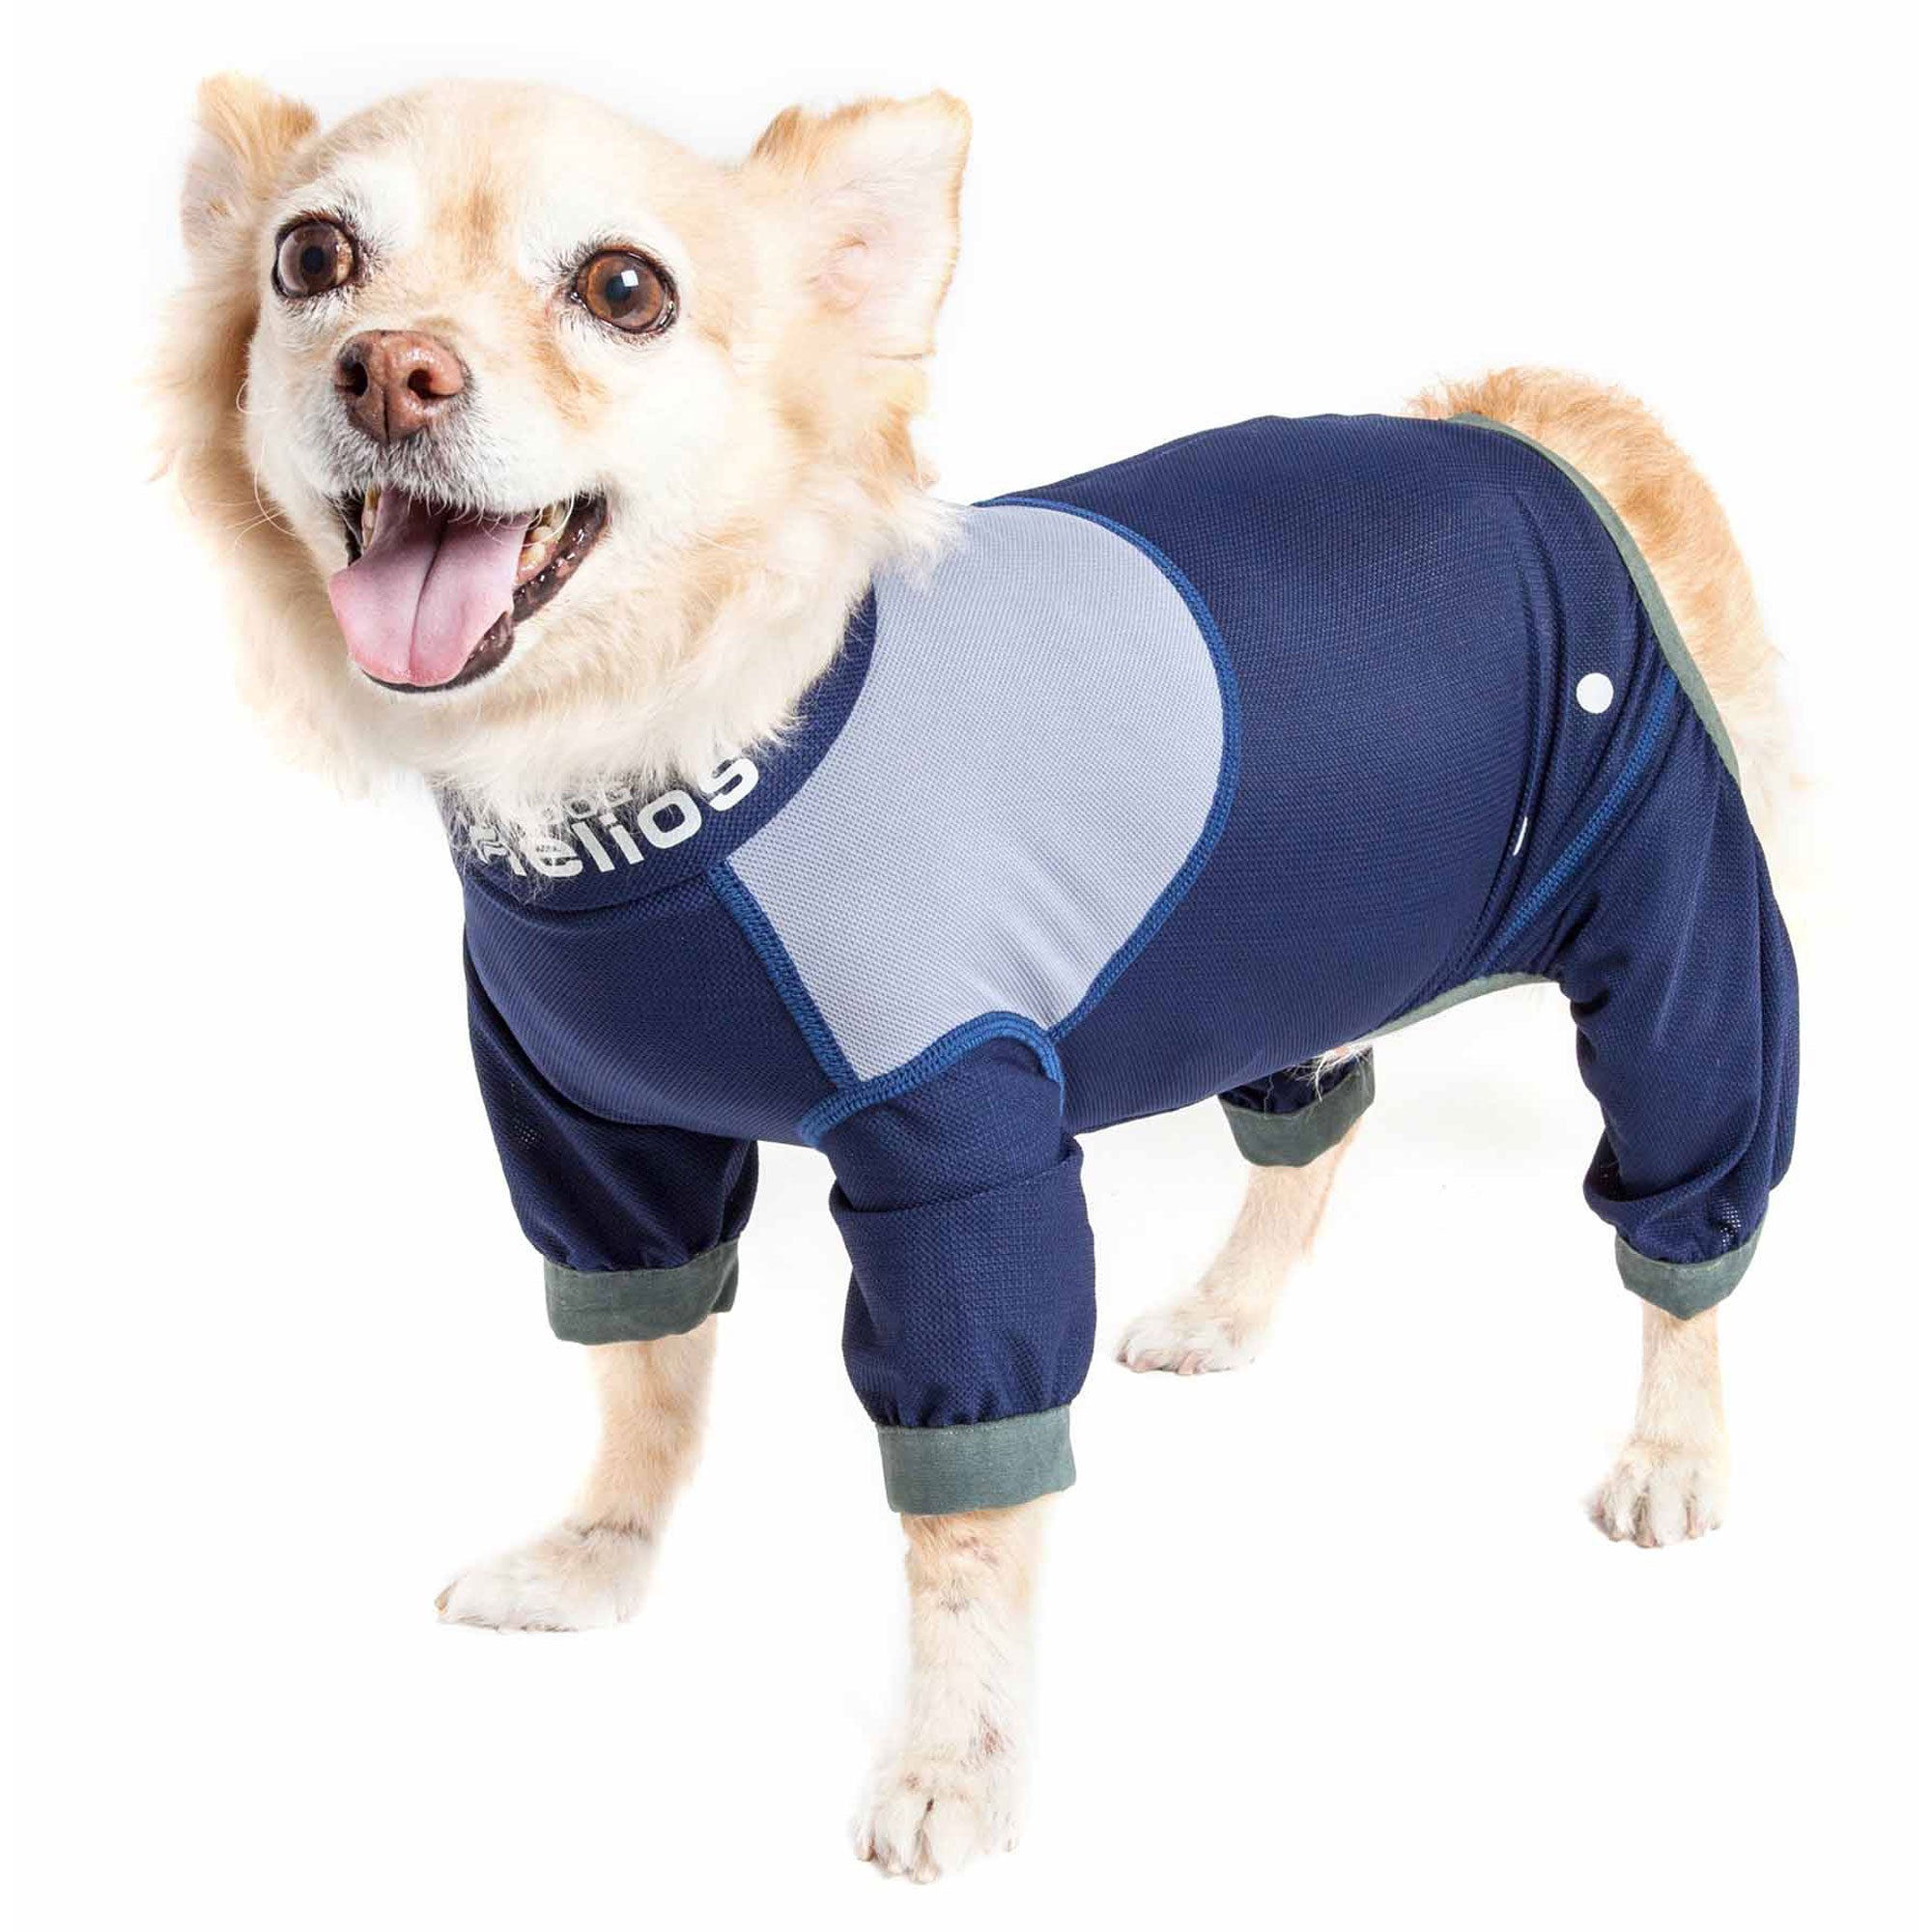 Dog Helios® Tail Runner Dog Track Suit - Blue & Gray - Medium